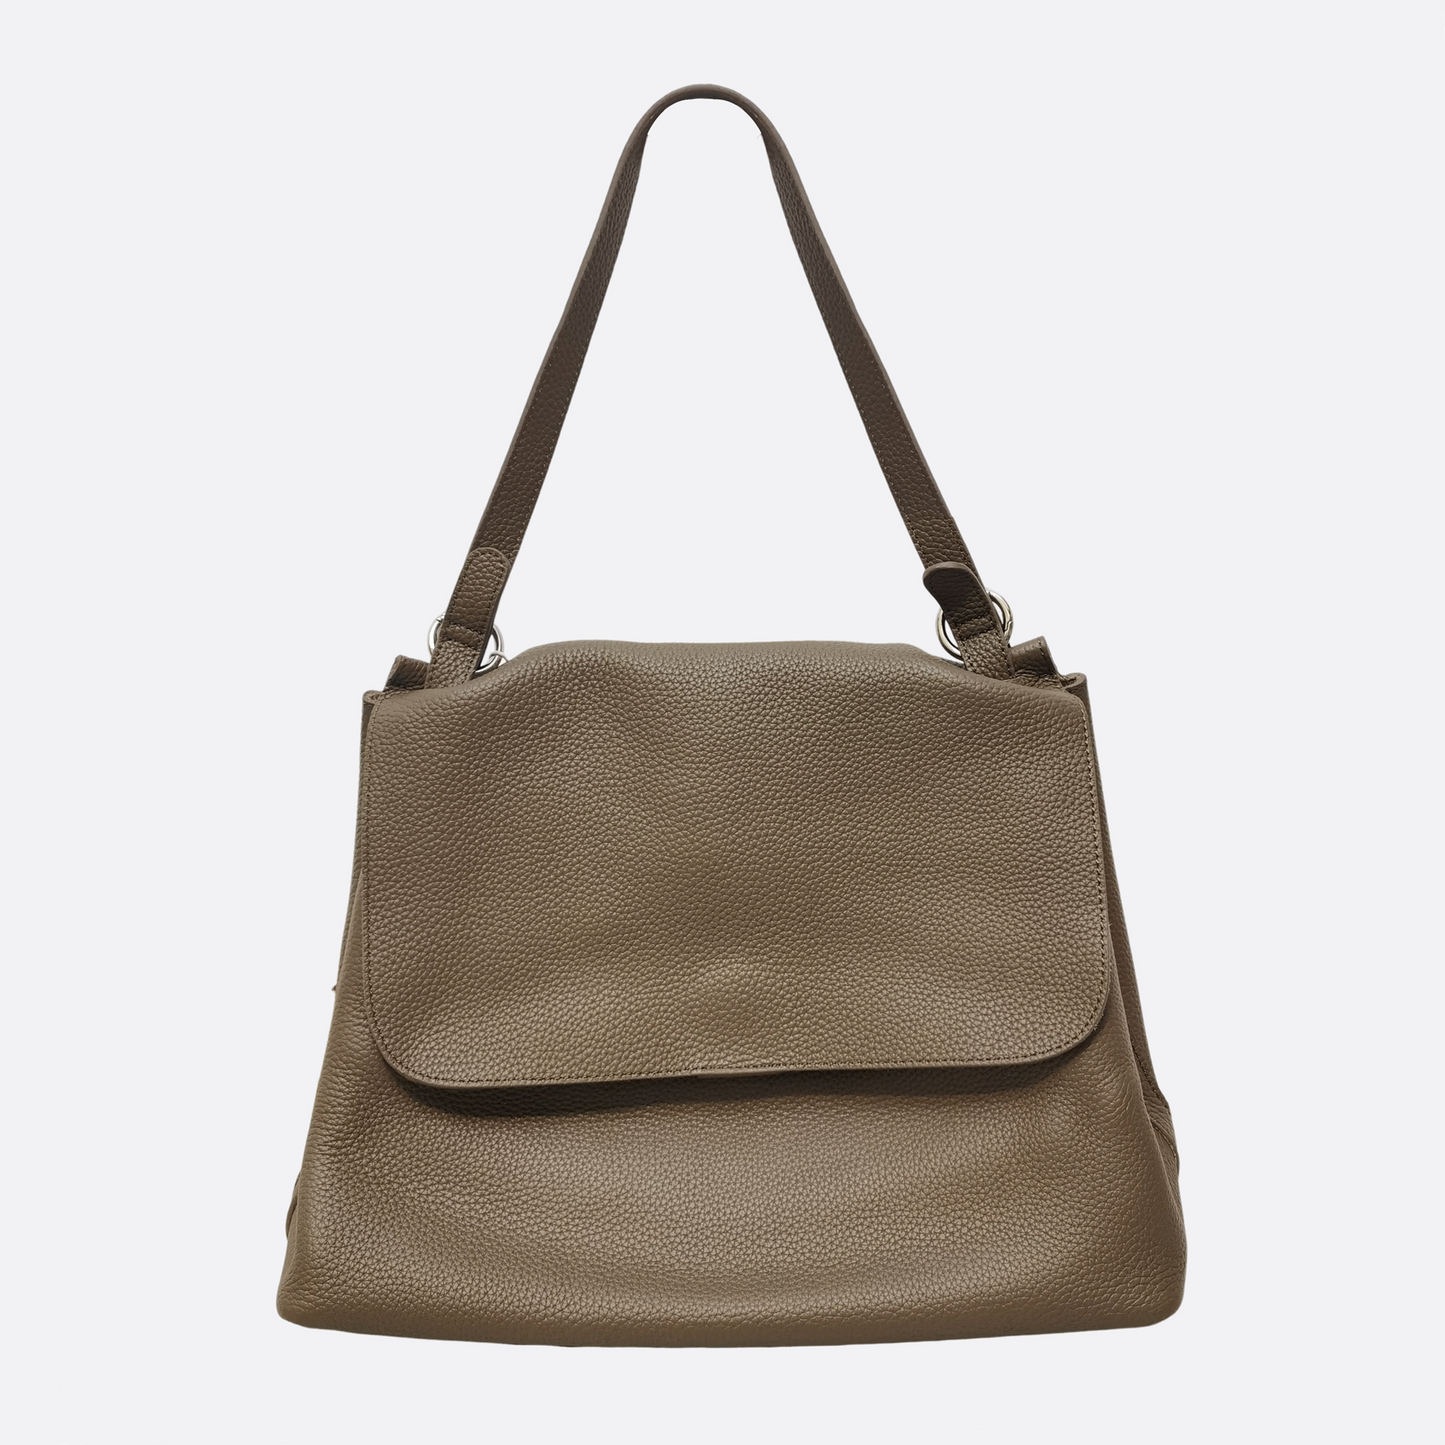 Women's genuine cowhide leather handbag Ingrid V3 design